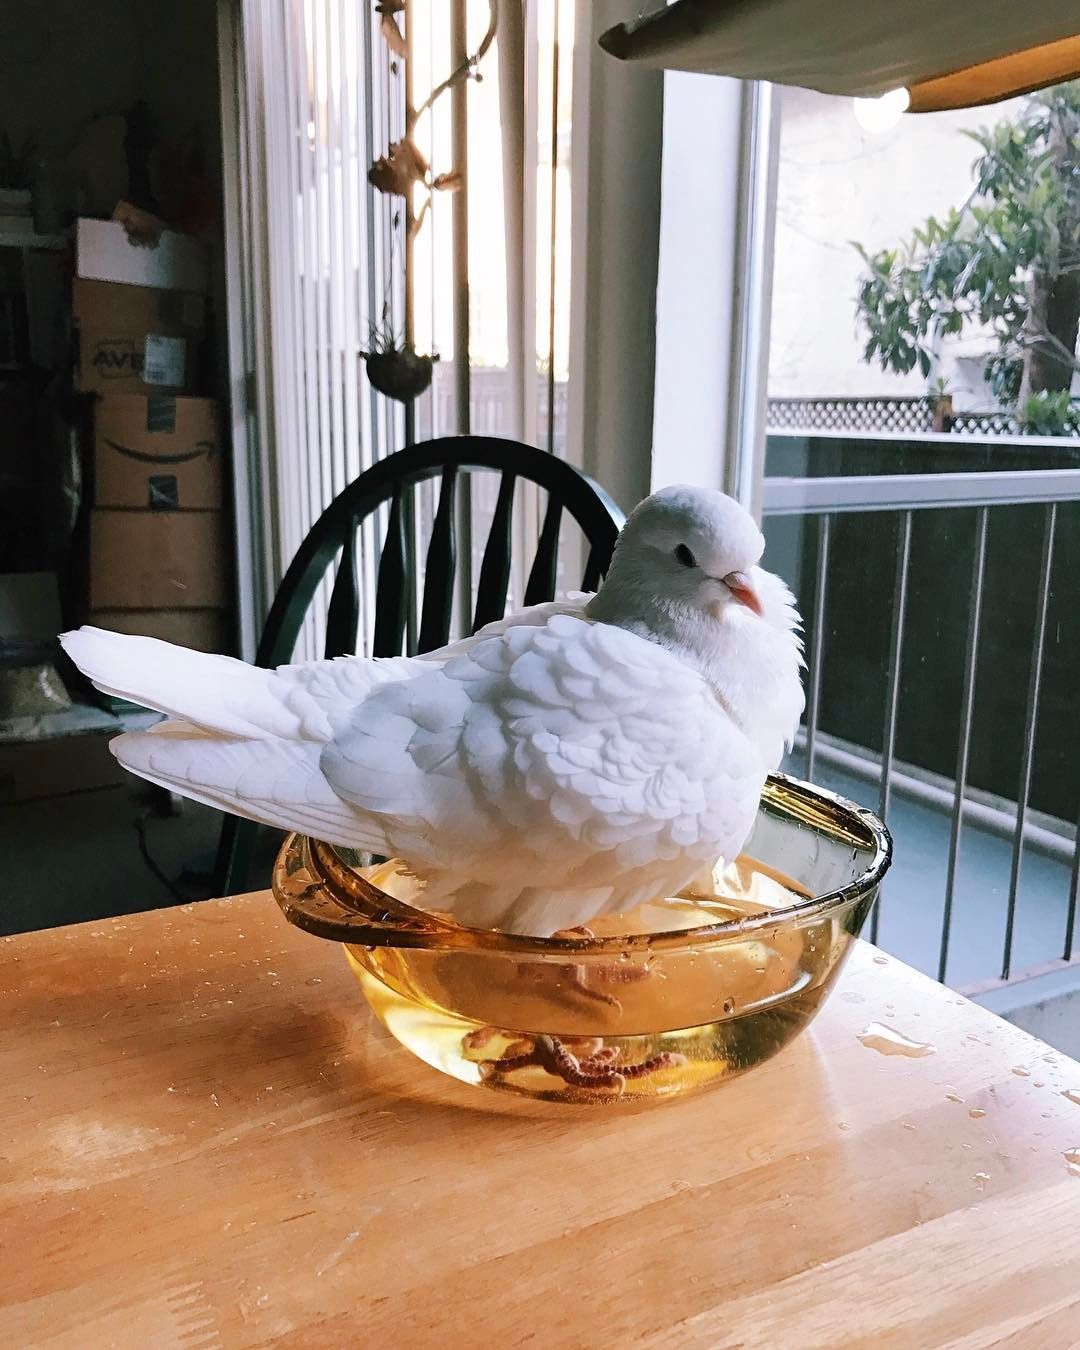 Сколько живут голуби в домашних условиях?